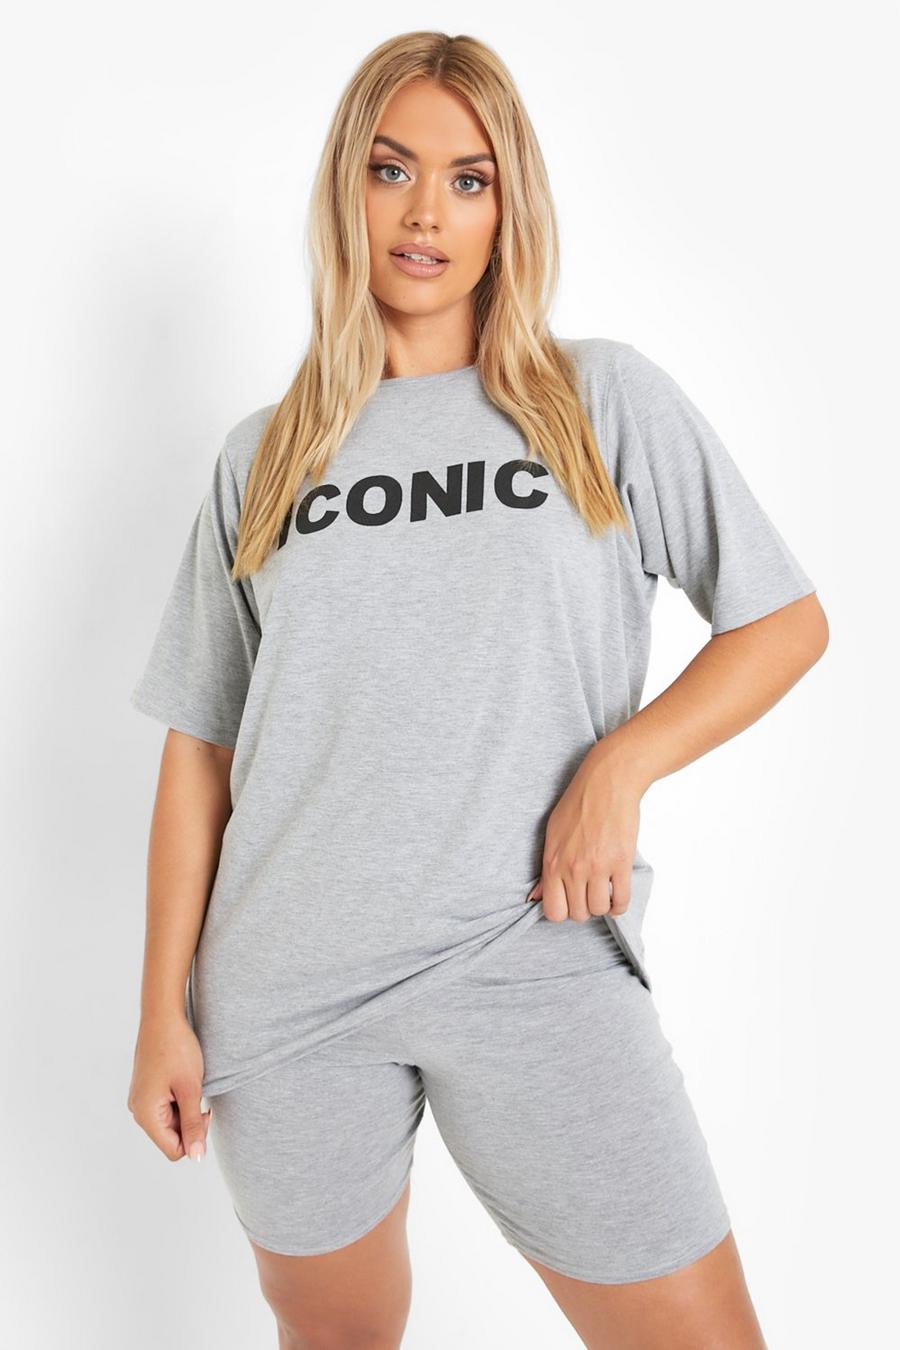 Set coordinato Plus Size - T-shirt con slogan Iconic & pantaloncini, Grigio image number 1